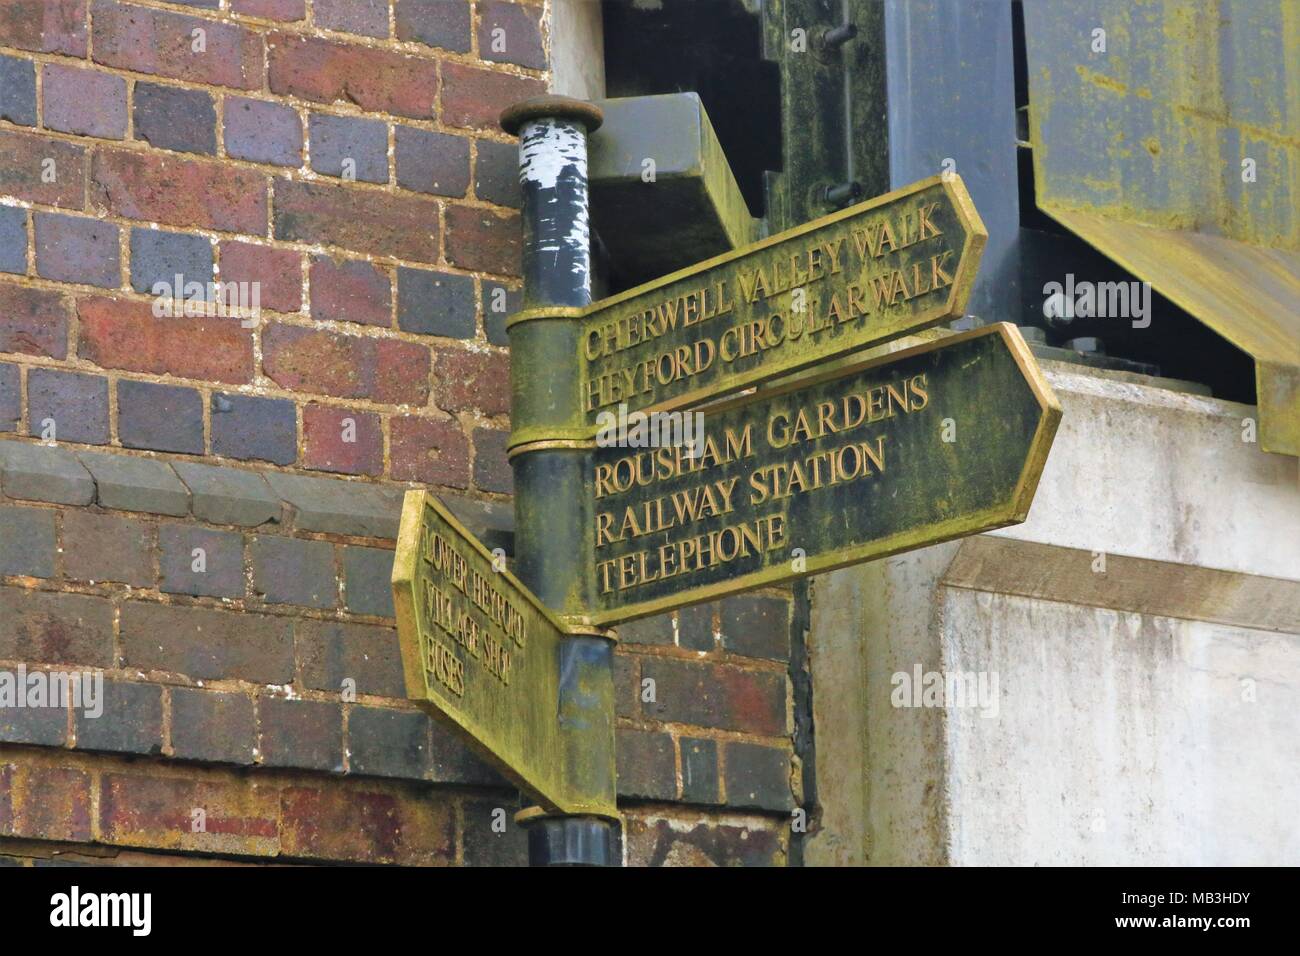 Cherwell Valley Walk, Heyford Circular Walk, Rousham Gardens, Railway Station, Telephone, Lower Heyford, Village Shop, Buses' old style sign Stock Photo